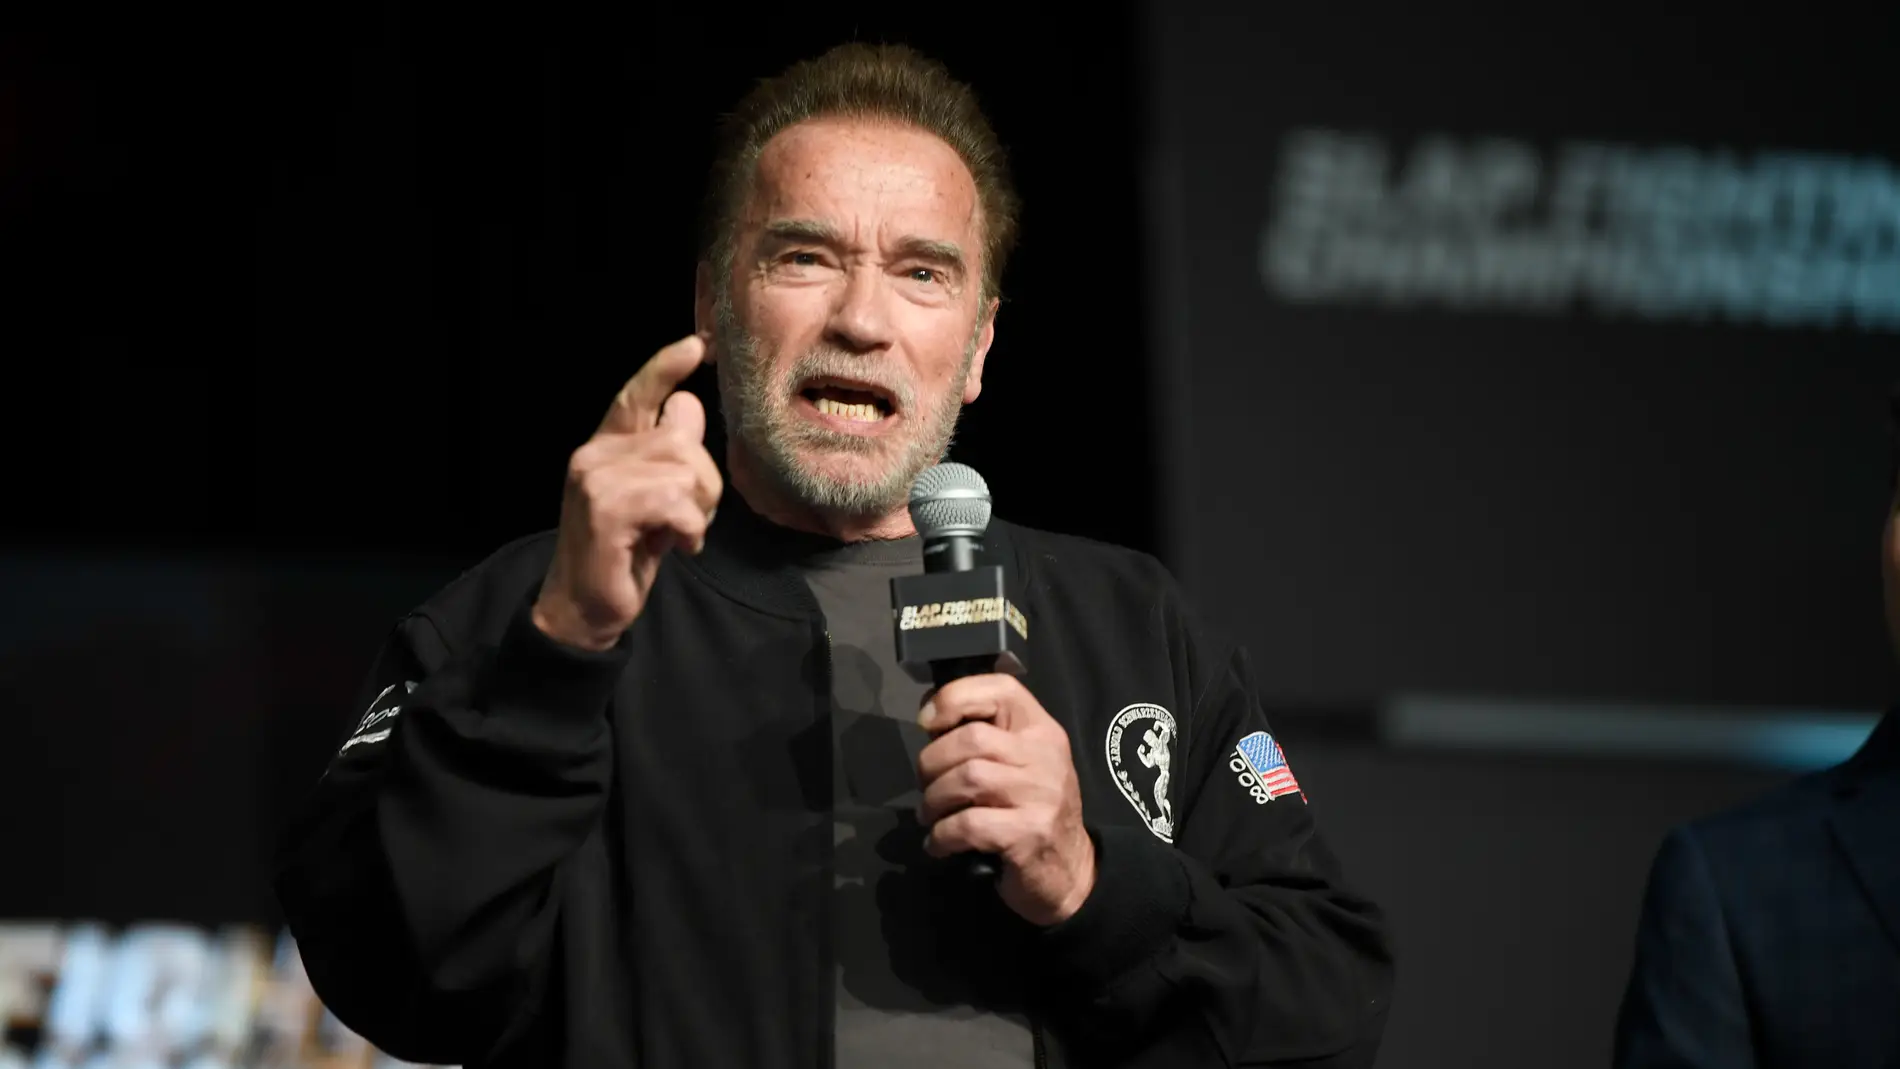 El actor Arnold Schwarzenegger | Foto: Gaelen Morse/Getty Images